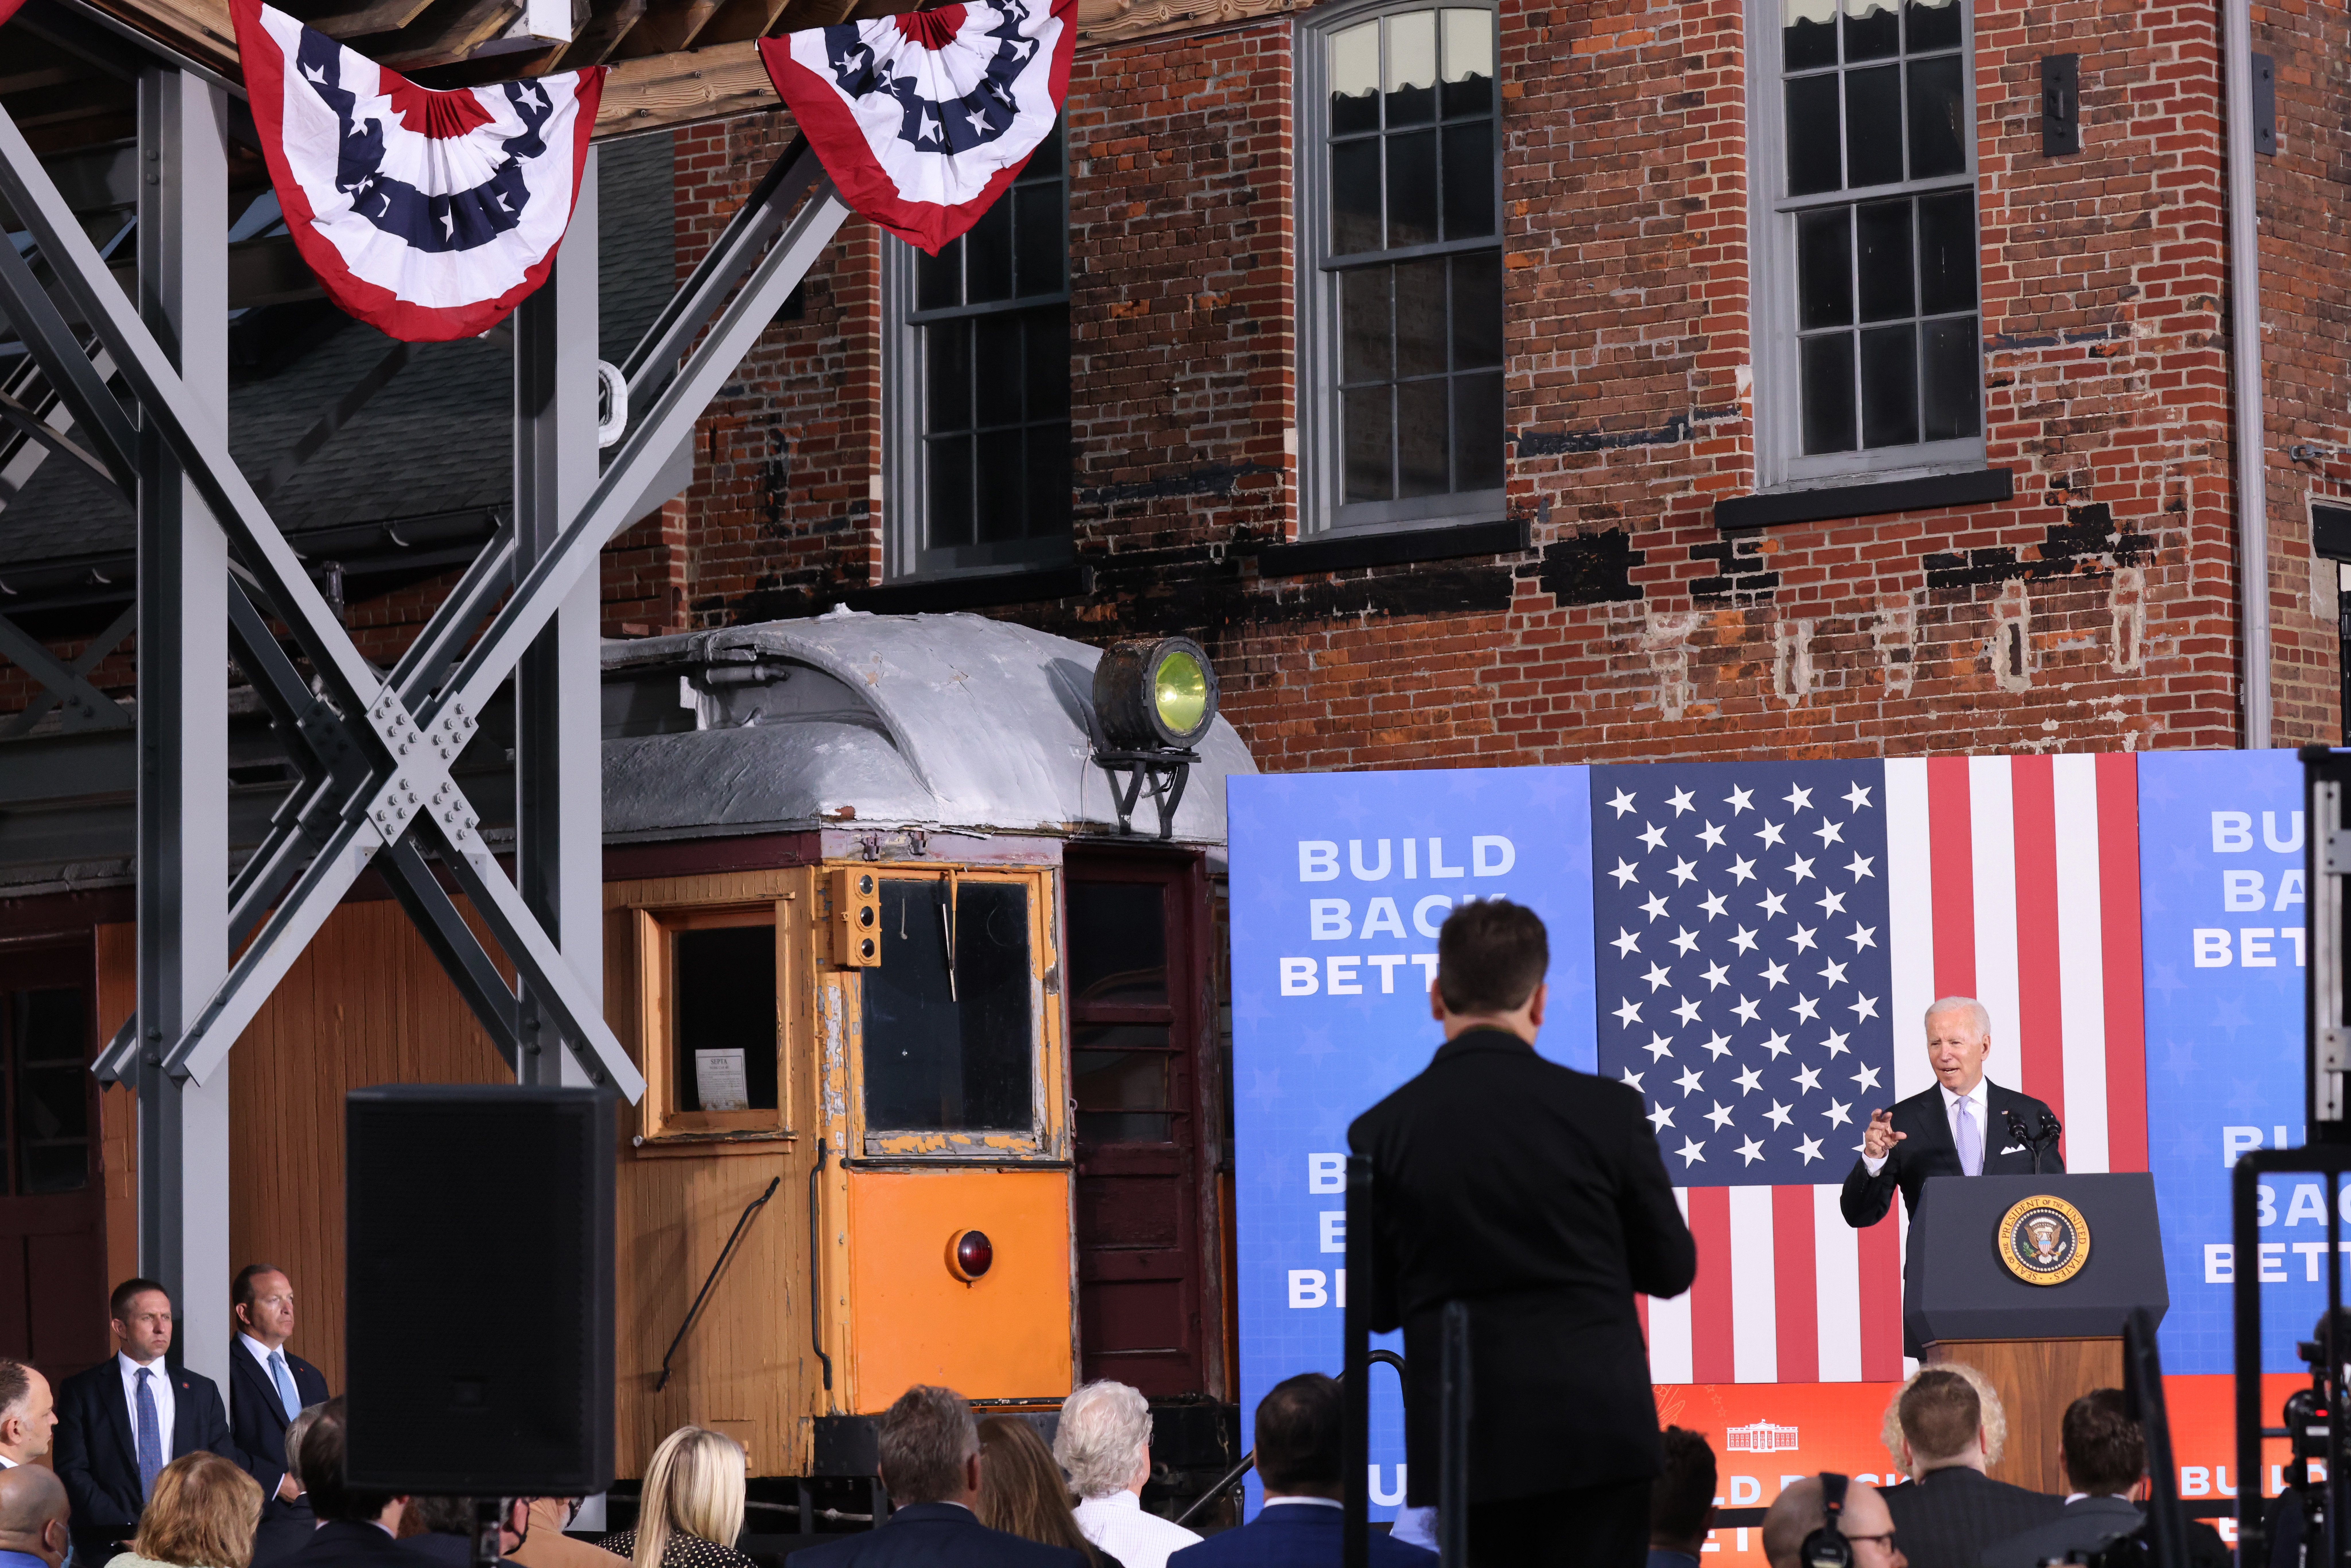 President Joe Biden speaks at an event on Oct. 20 in Scranton, Pennsylvania. (Spencer Platt/Getty Images)